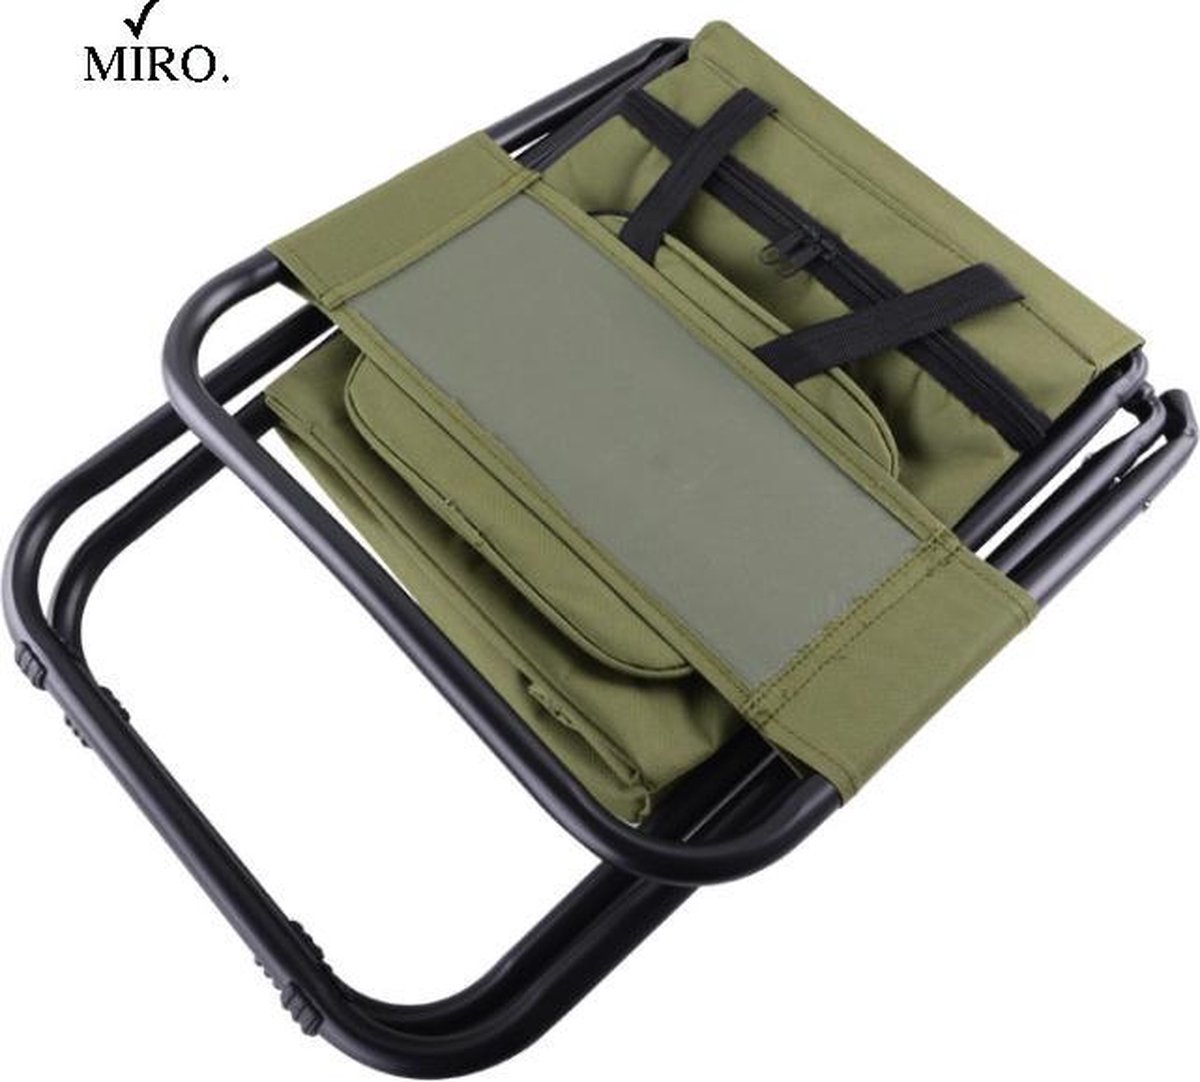 Chaise de pêche MIRO dossier pliable portable + sac de rangement Plein air